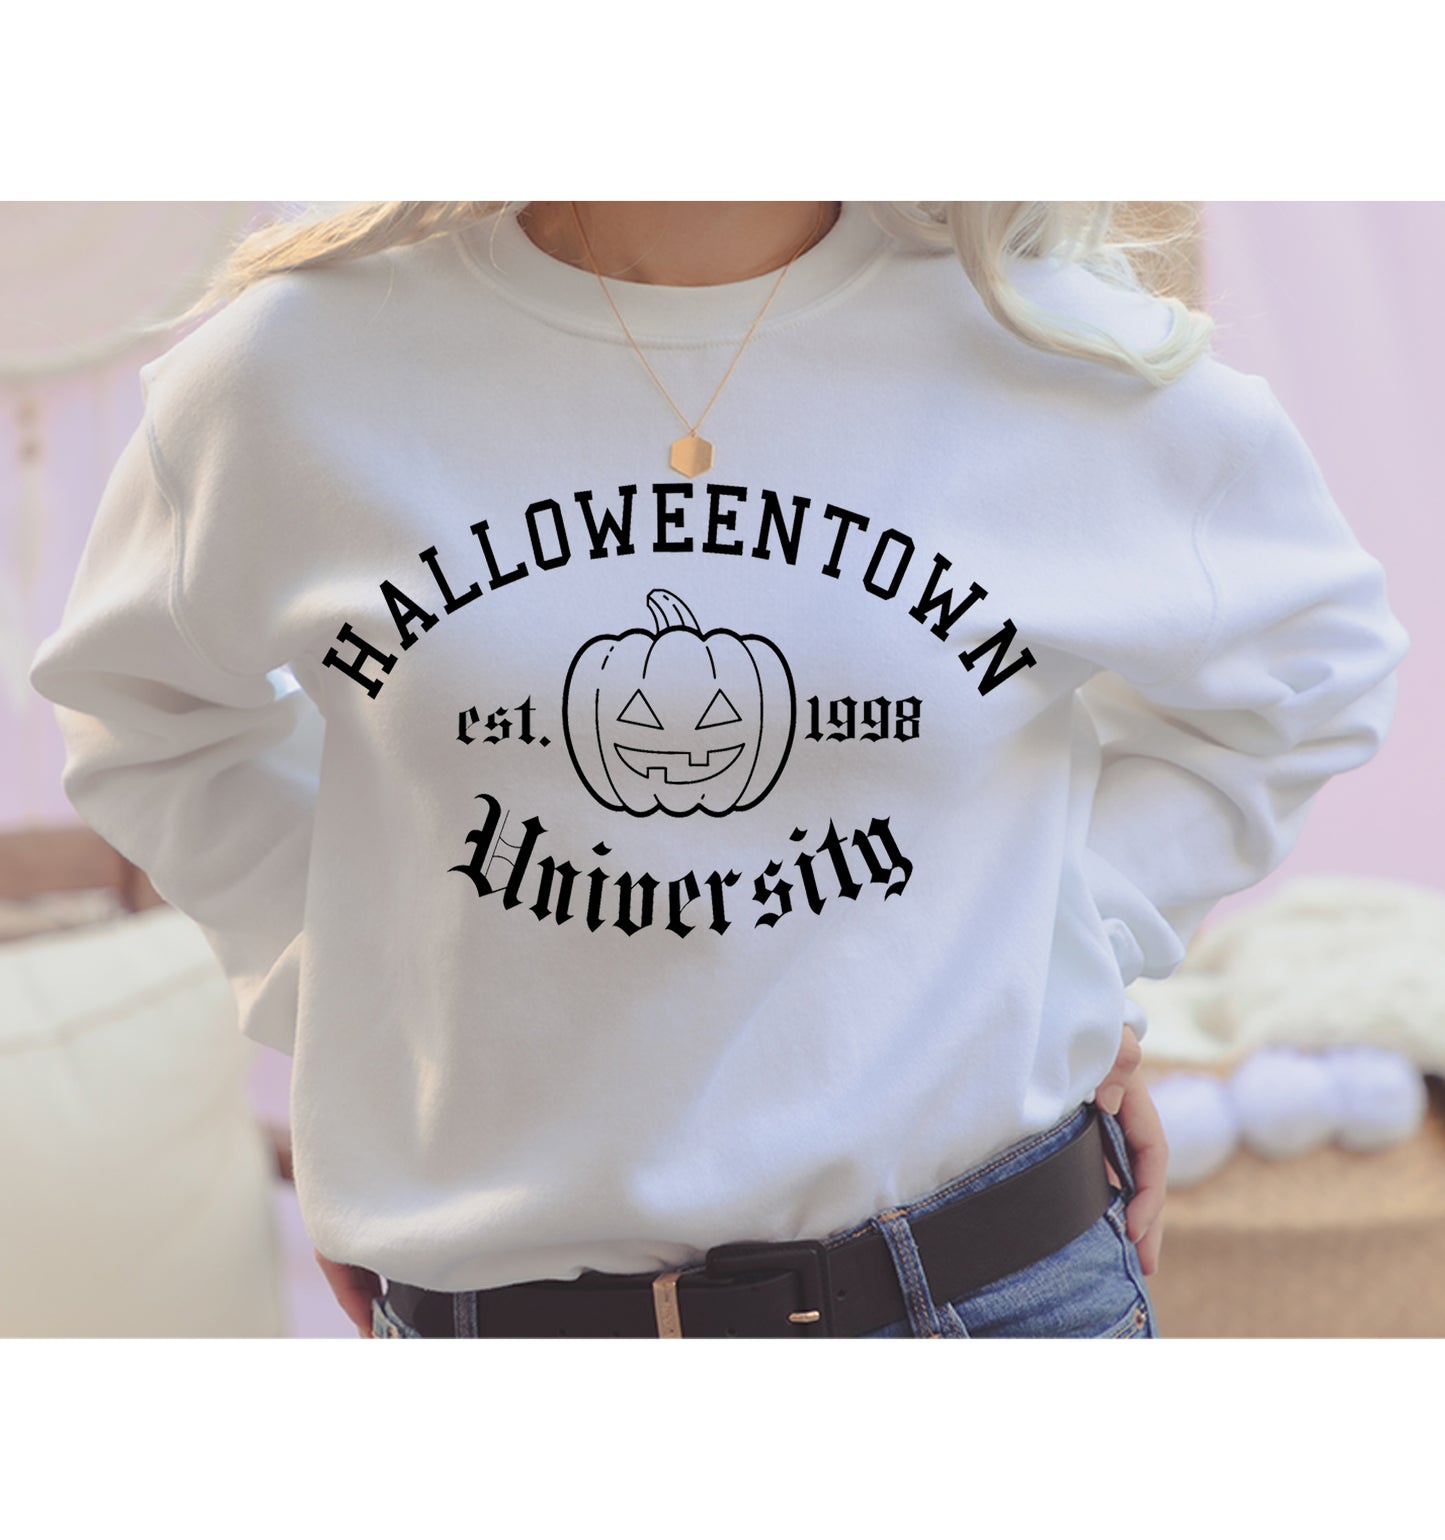 Halloweentown University - Sweatshirt